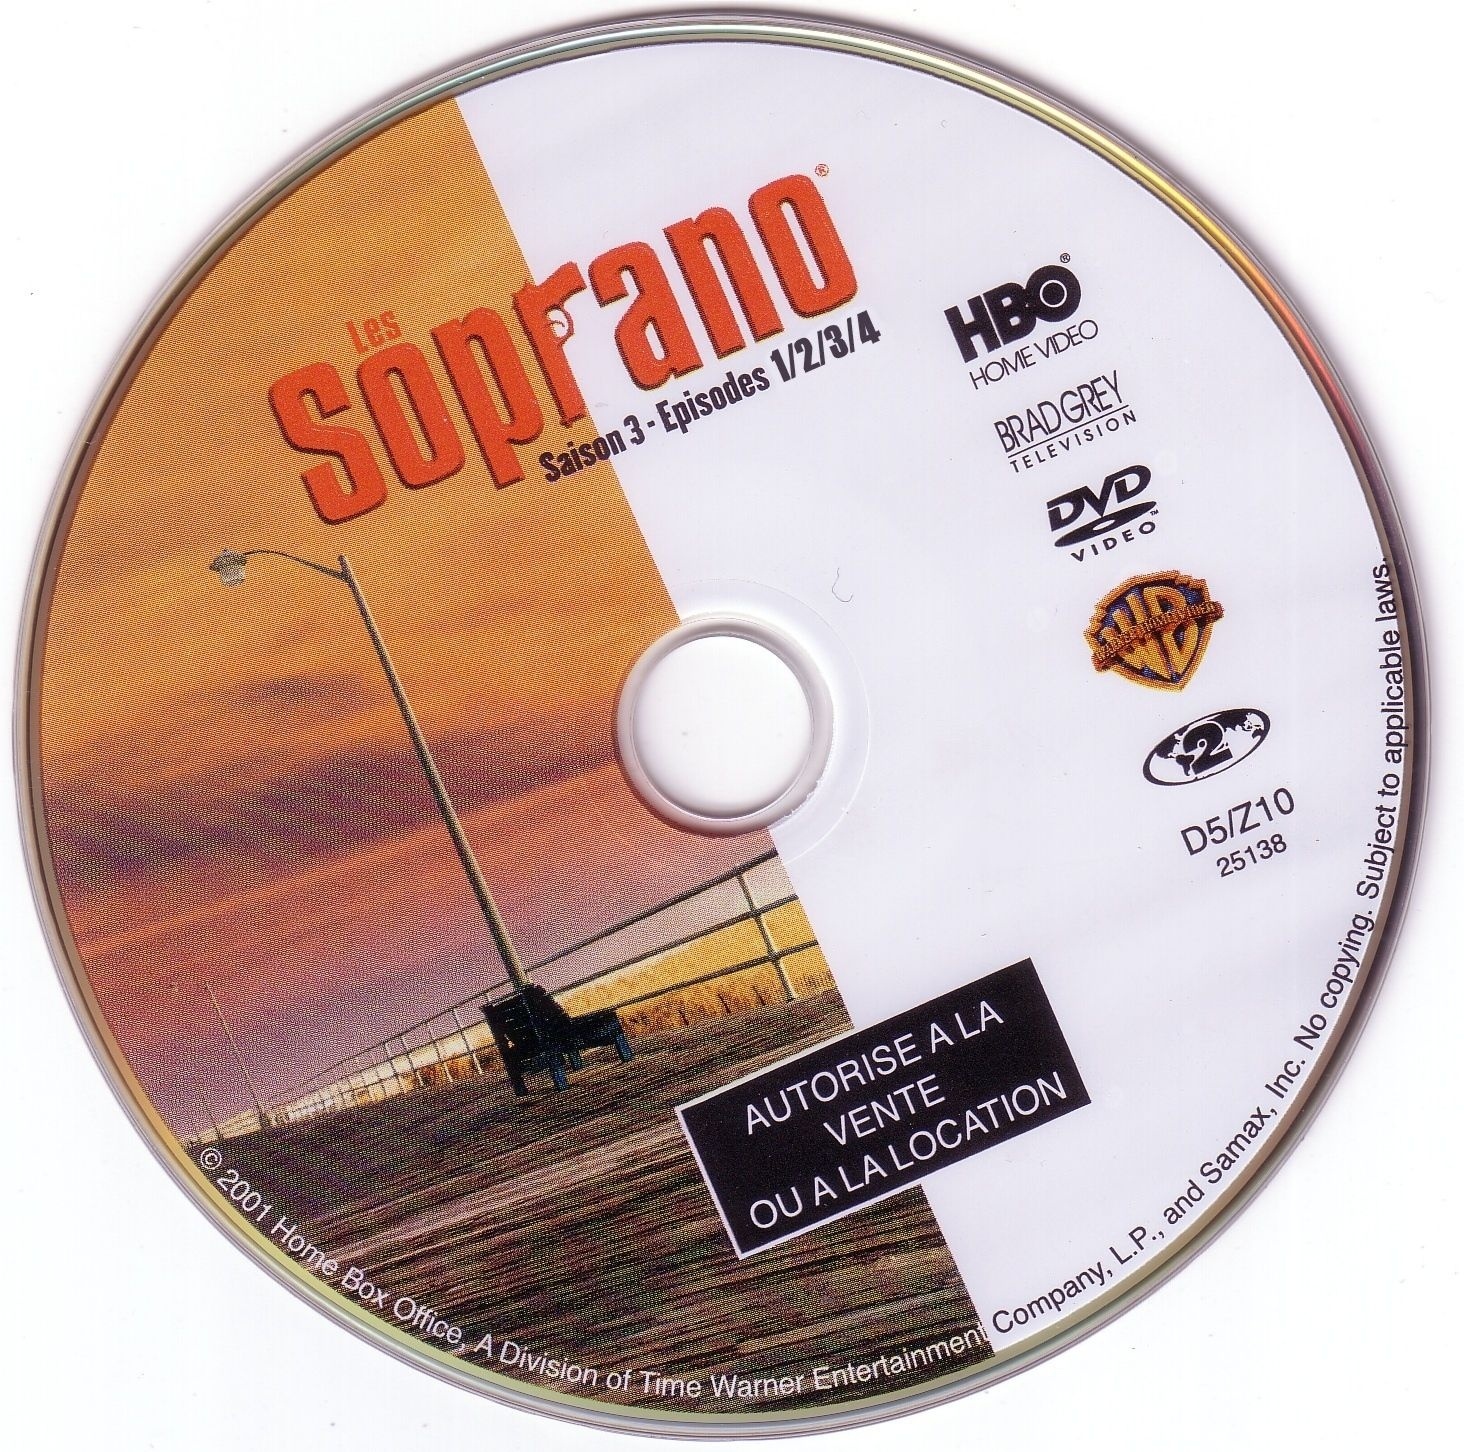 Les Soprano saison 3 DVD 1